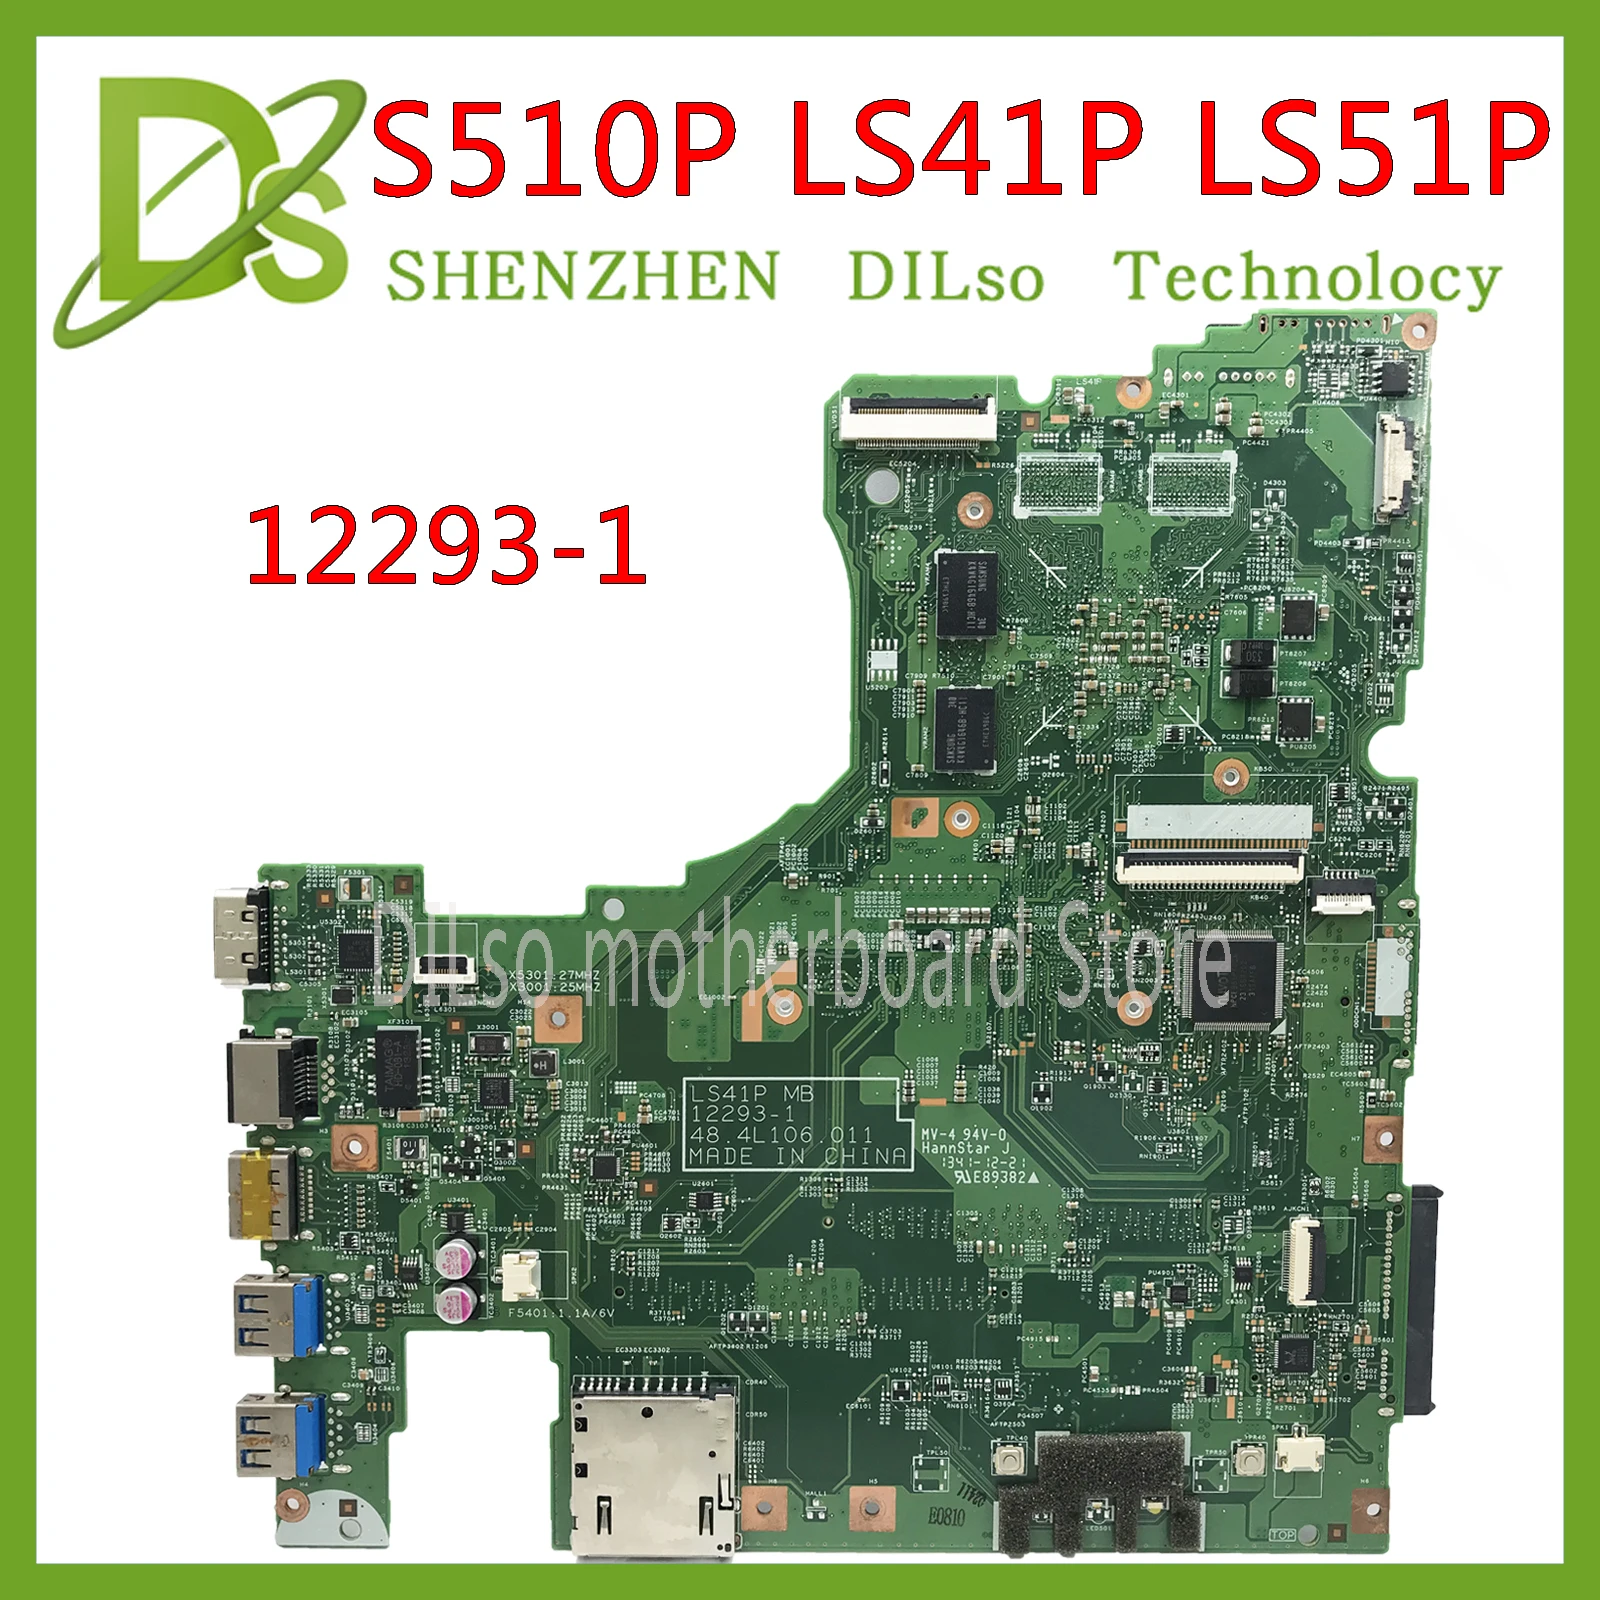 Discount  KEFU 12293-1 48.4L106.011 motherboard for Lenovo S510P LS41P LS51P motherboard I5-4200U CPU GT720M-